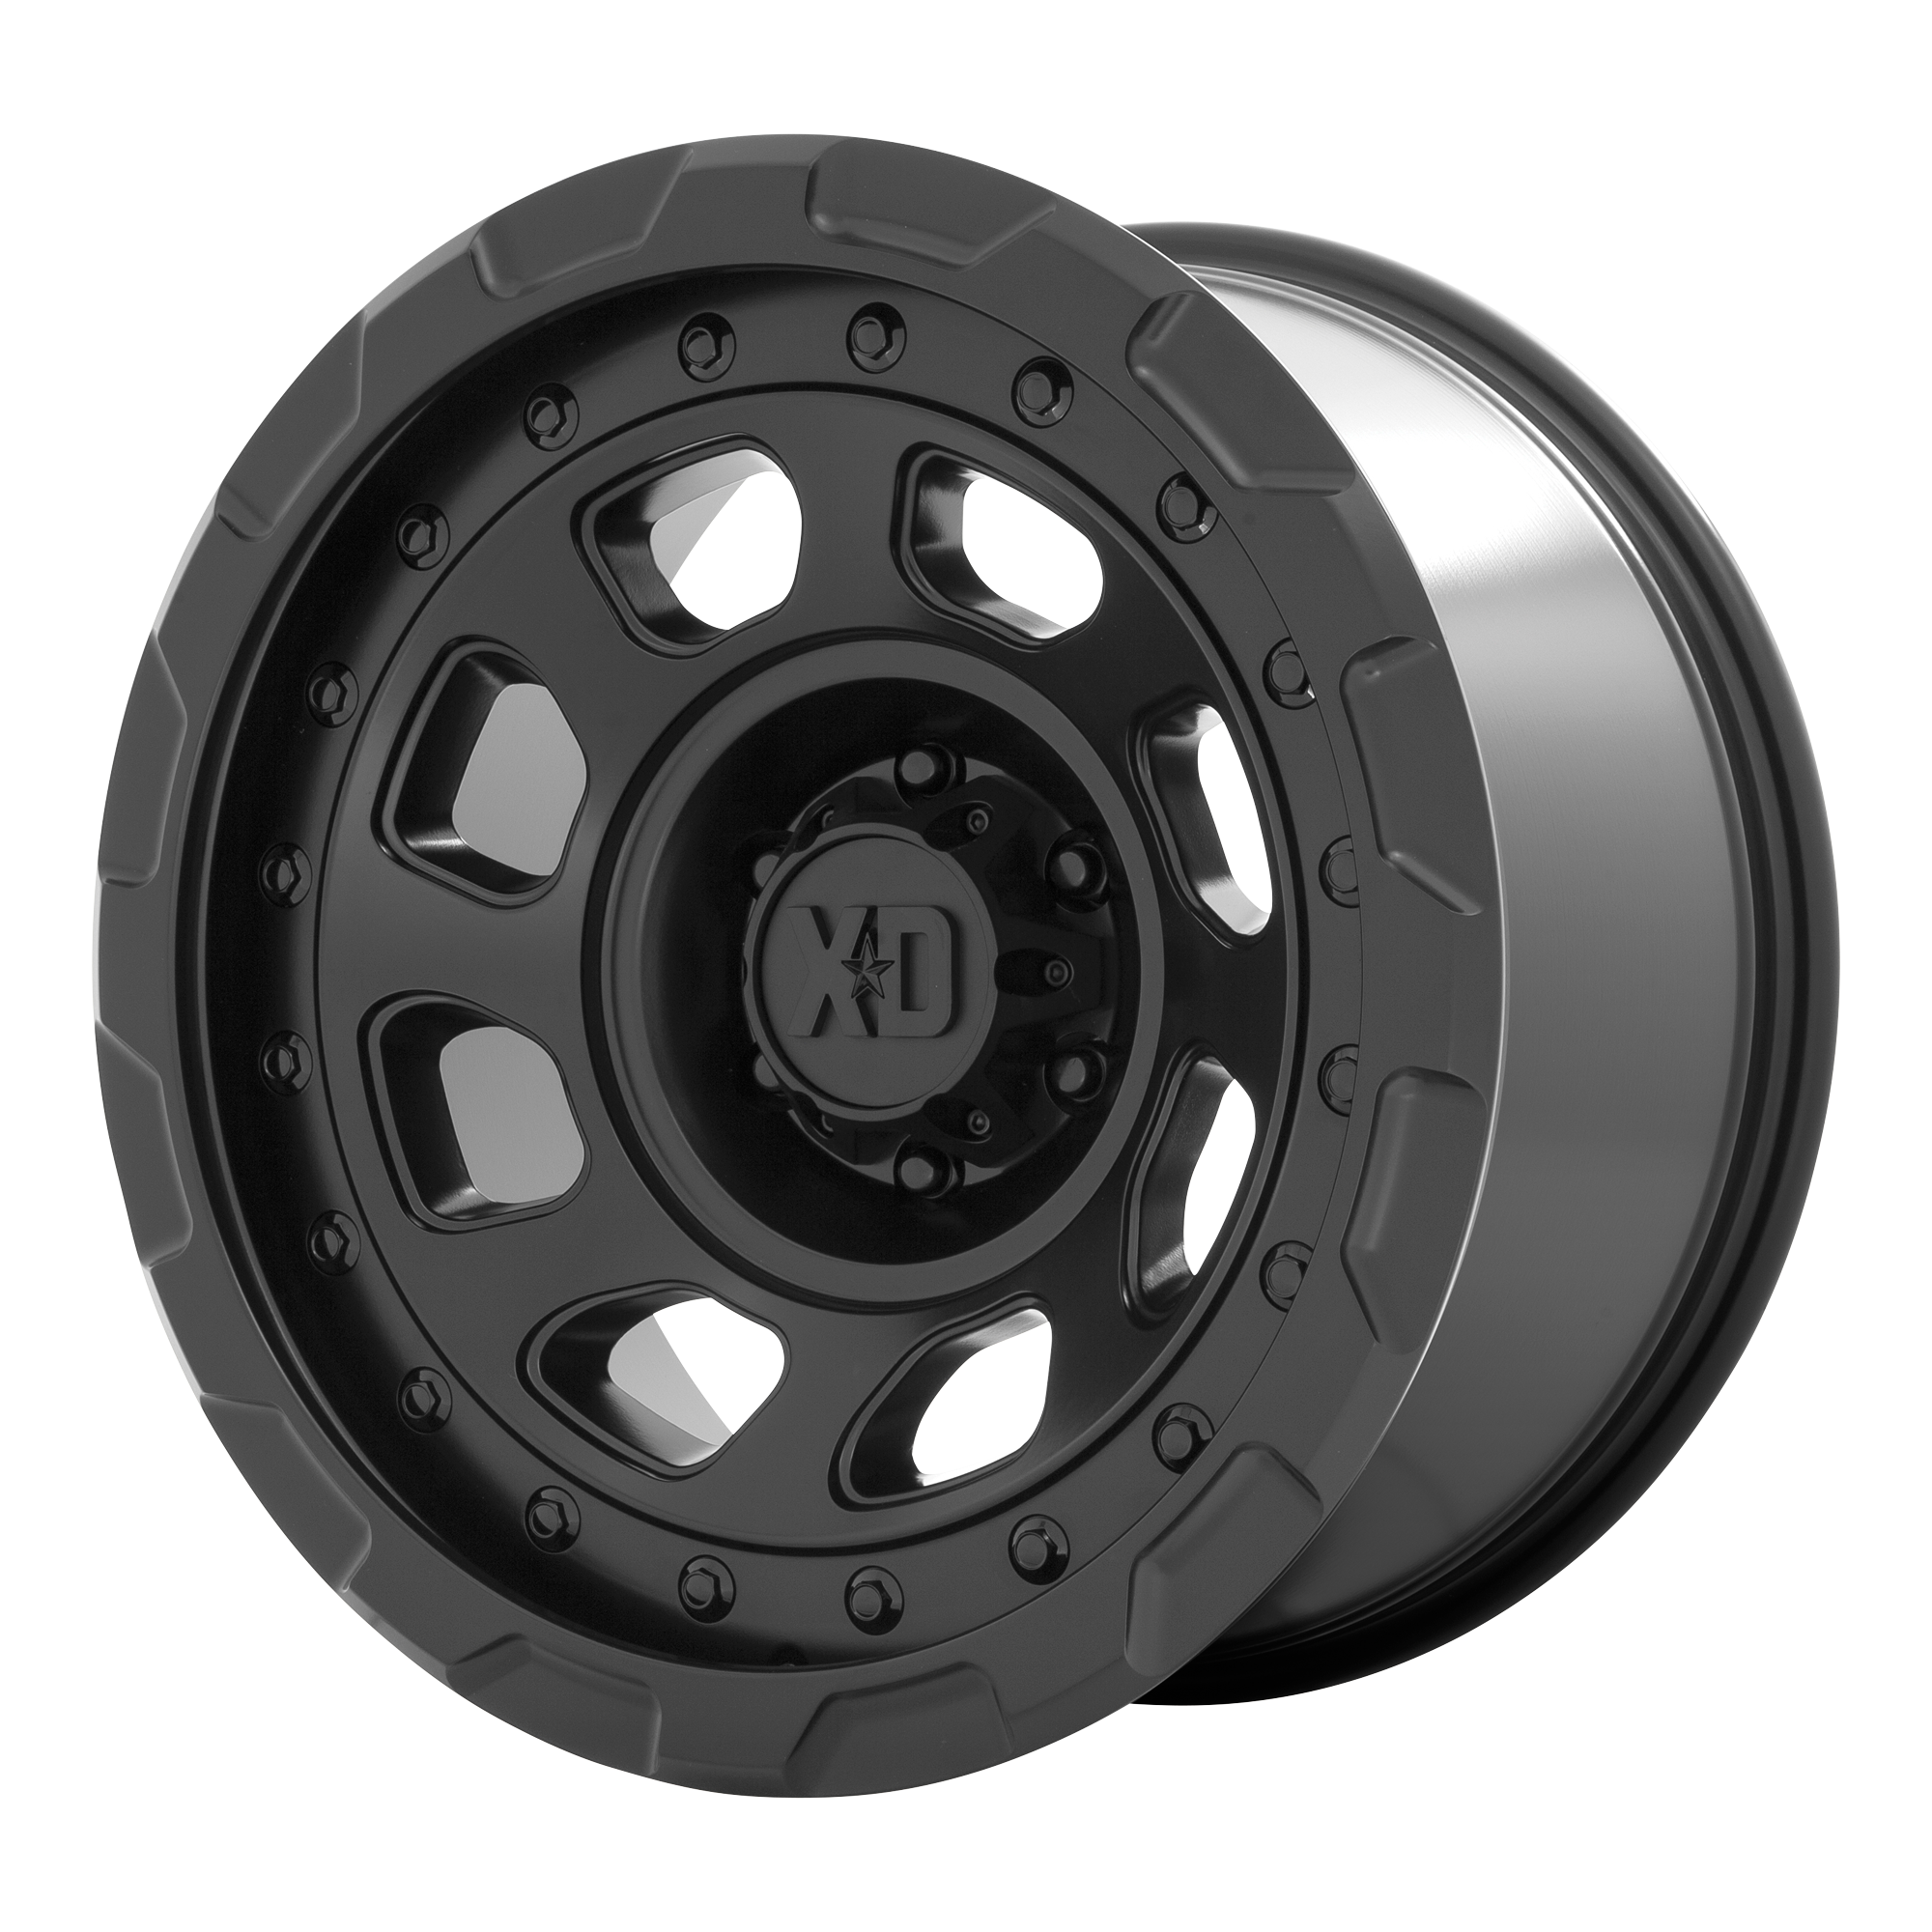 XD 17"x9" Non-Chrome Satin Black Custom Wheel ARSWCWXD86179080700